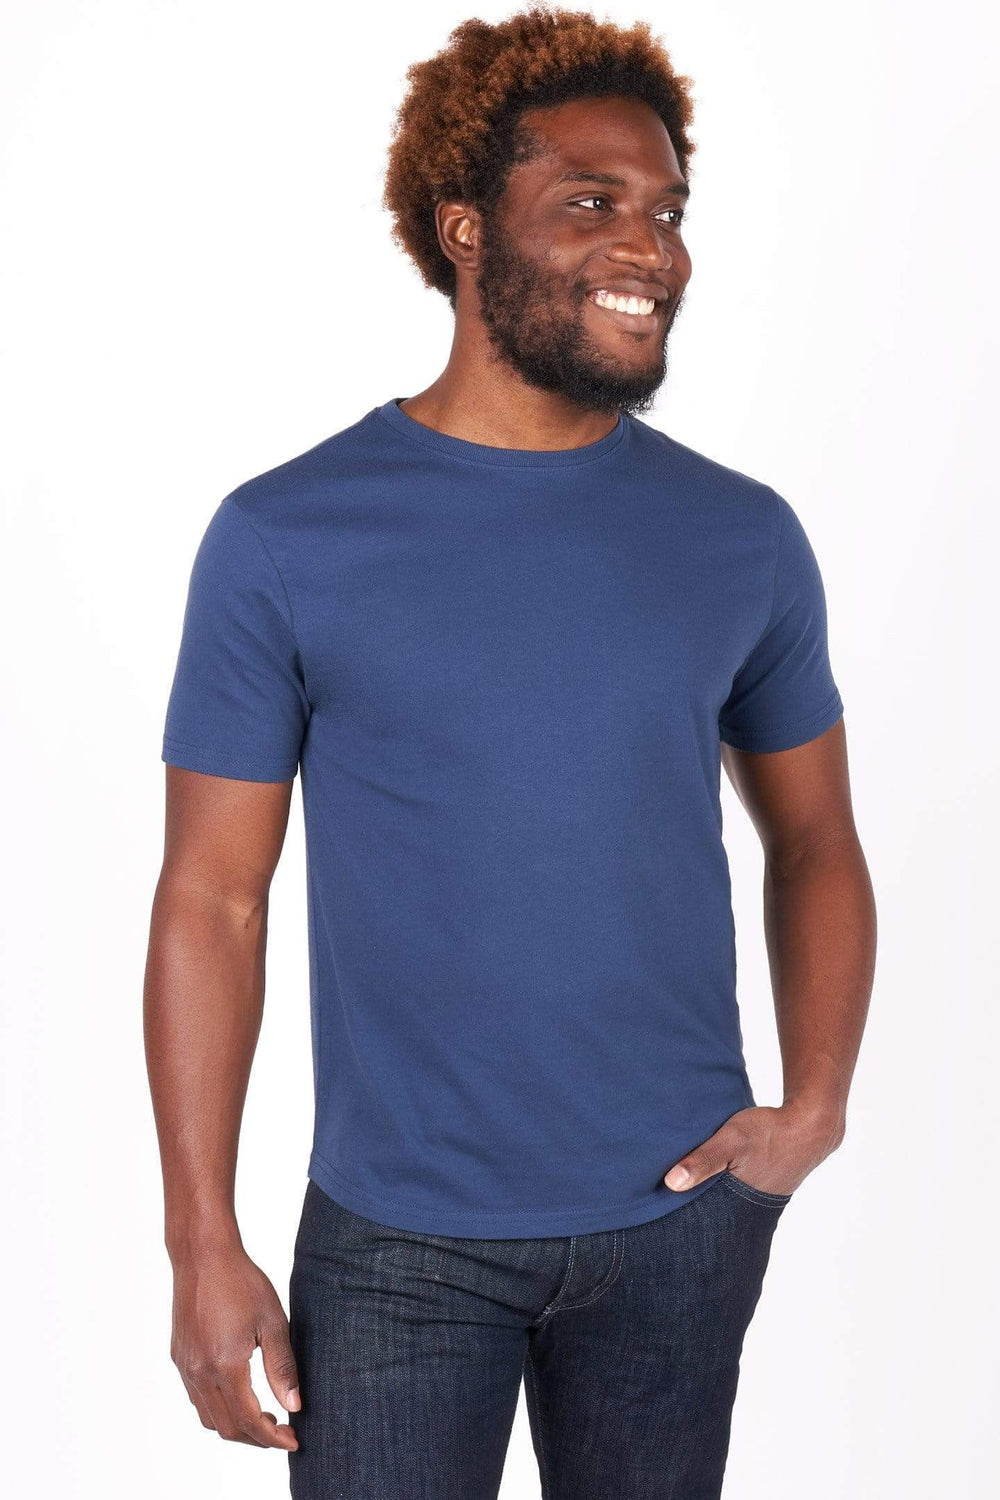 Buy Short Sleeve T-Shirts for Short Men